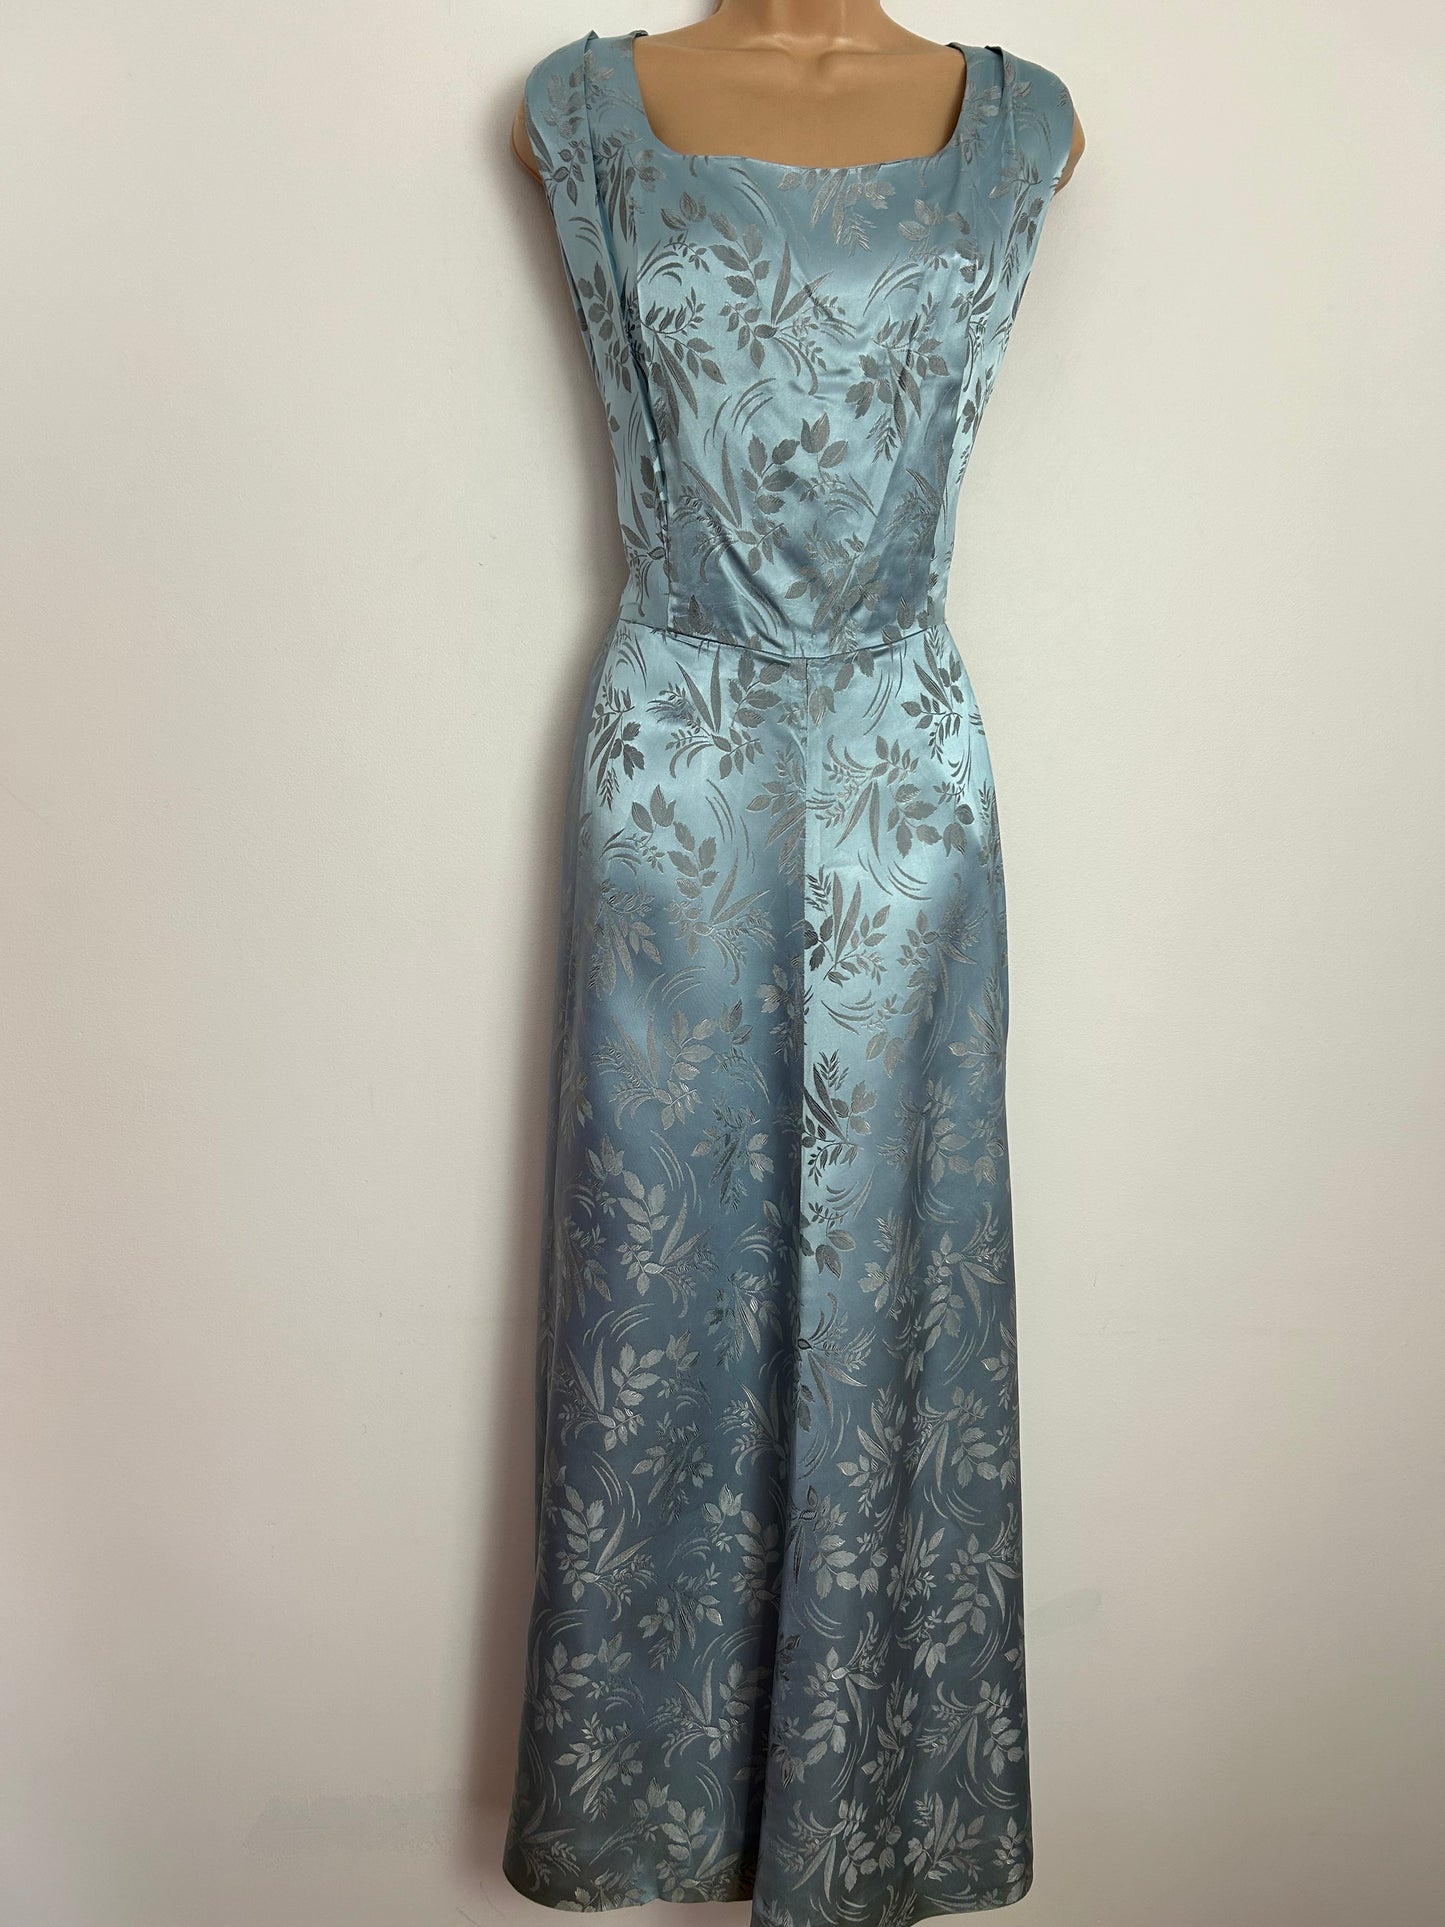 Vintage Early 1950s "O.Slender" Model UK Size 14-16 Beautiful Pale Blue Leaf Pattern Jacquard Occasion Maxi Dress